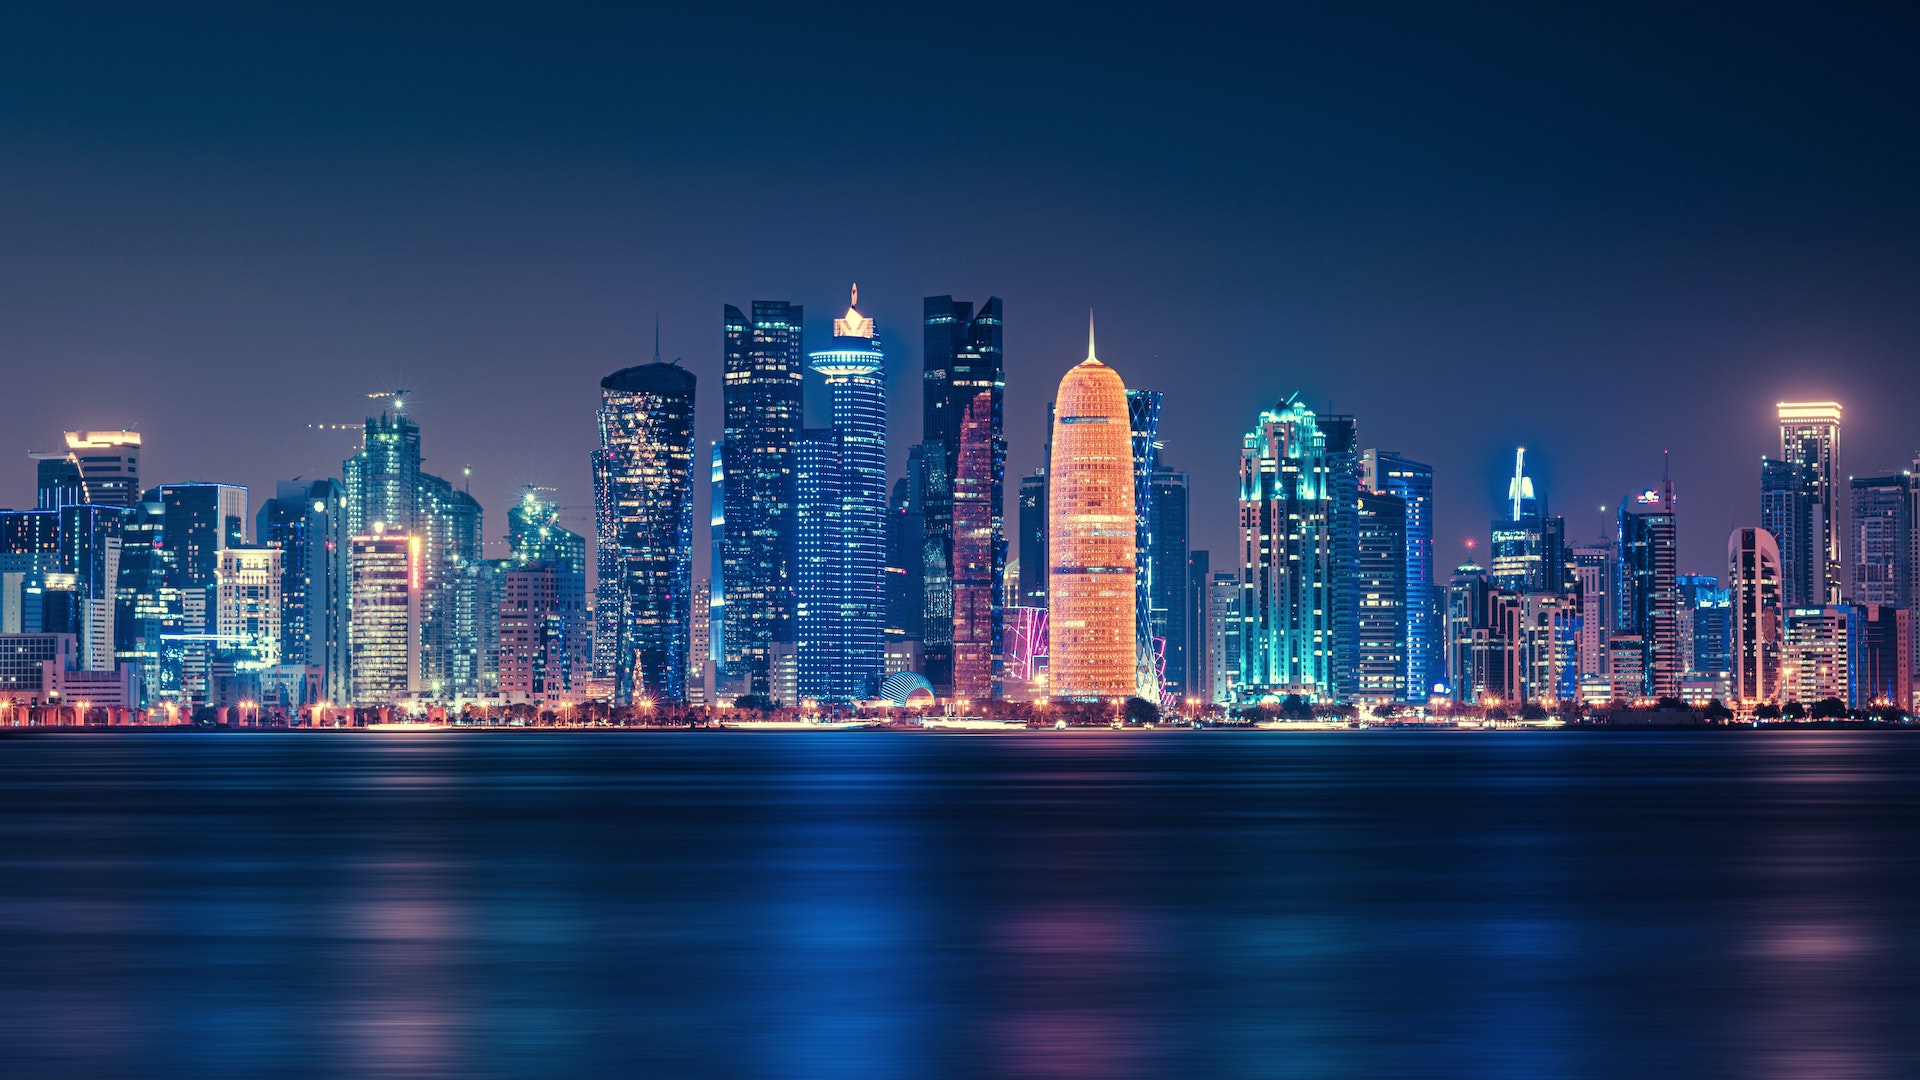 Qatari capital Doha is gearing up for World Cup 2022.